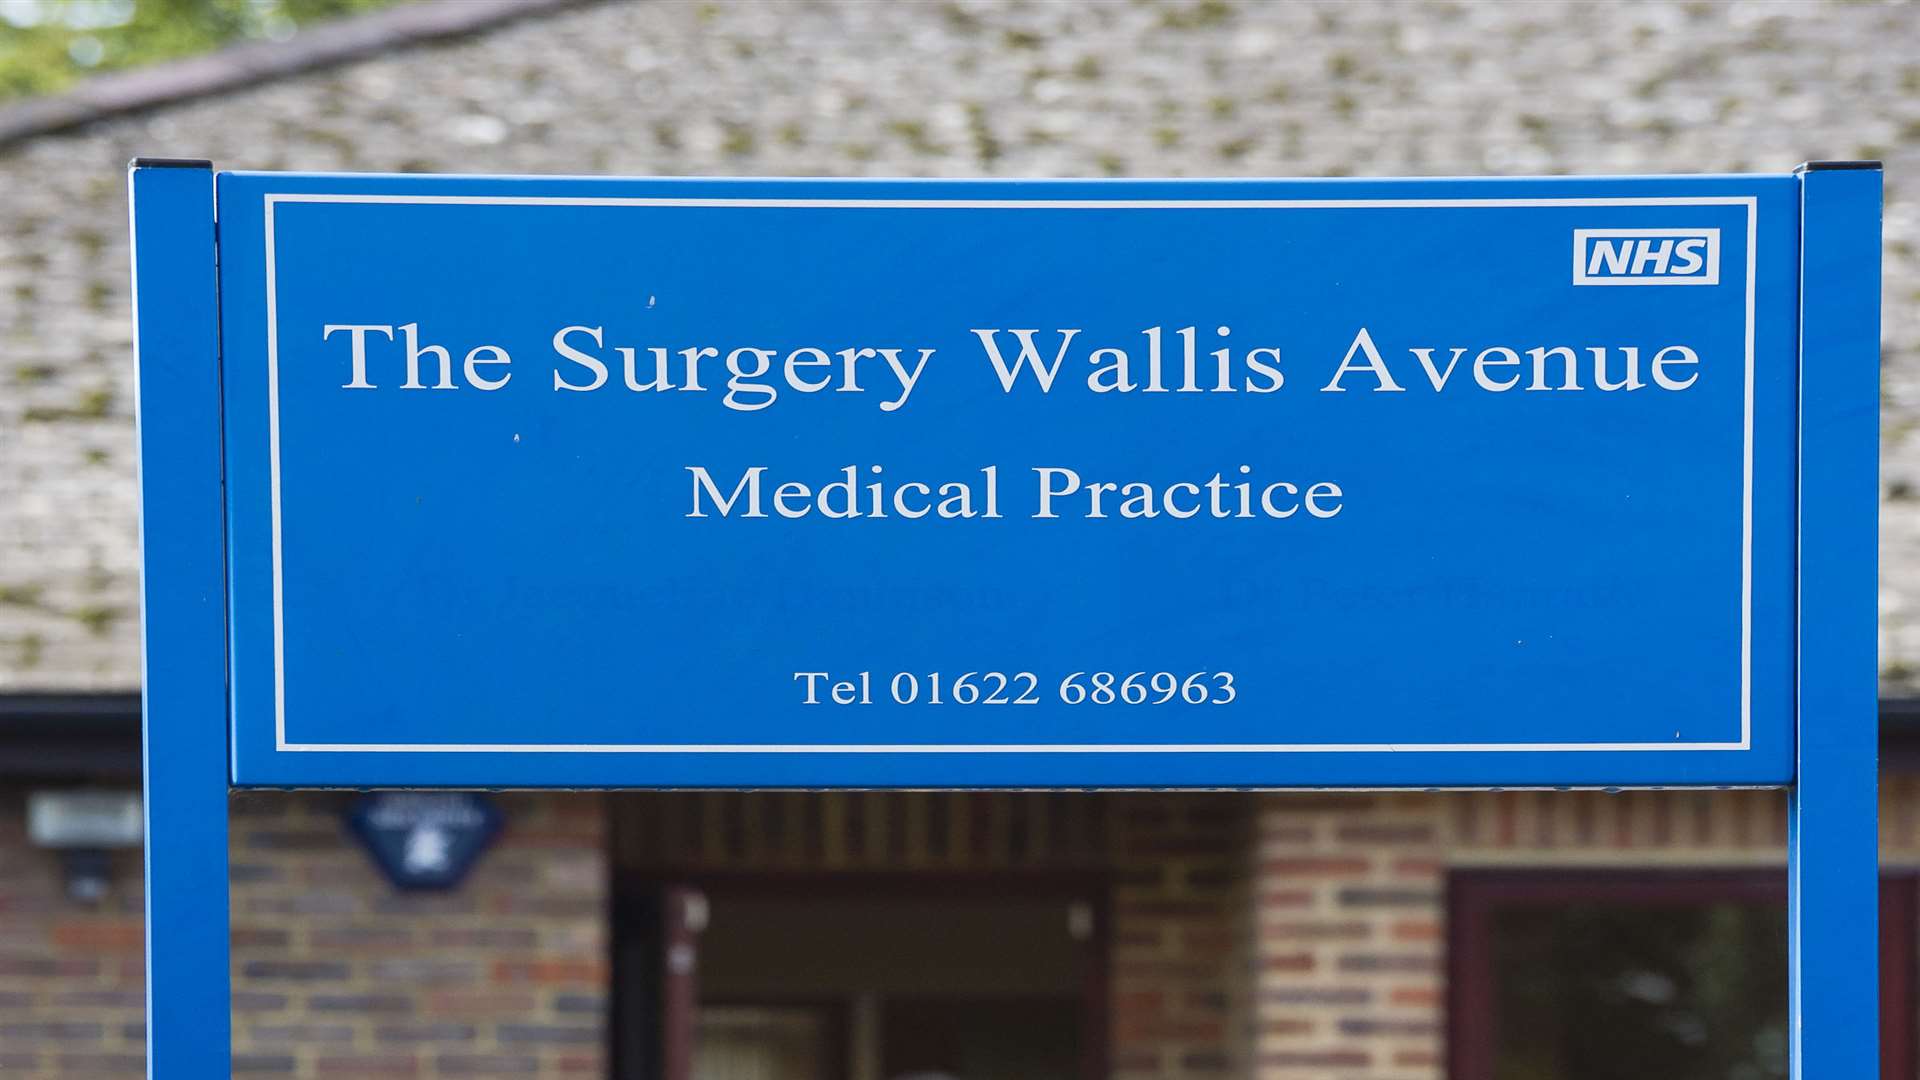 The Surgery, Wallis Avenue, Maidstone